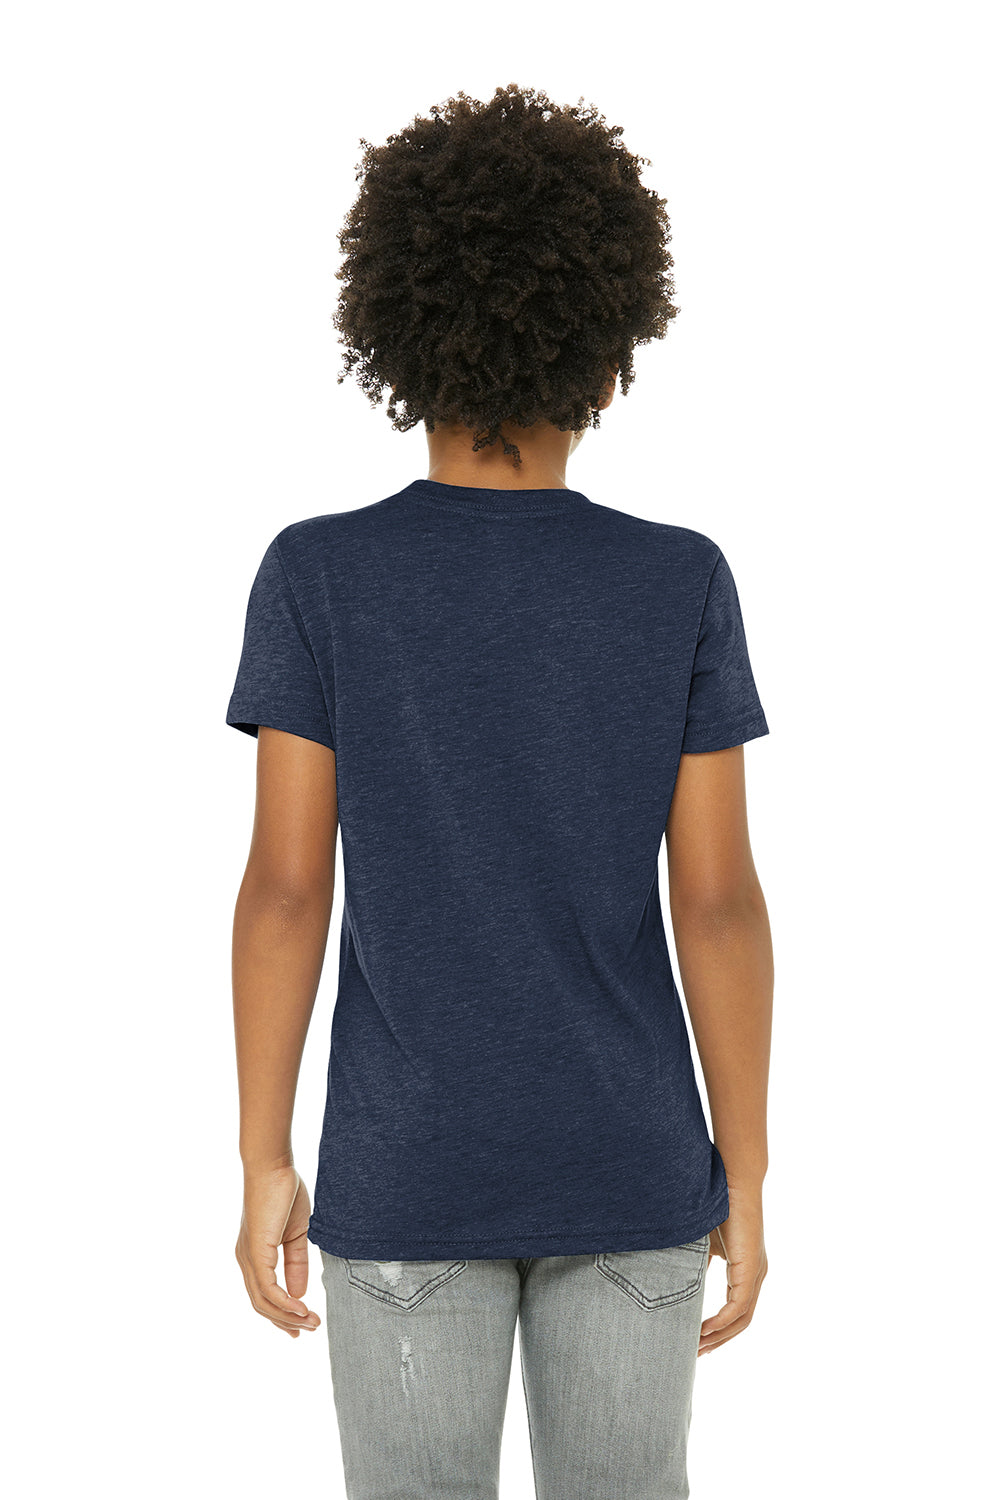 Bella + Canvas 3413Y Youth Short Sleeve Crewneck T-Shirt Solid Navy Blue Model Back